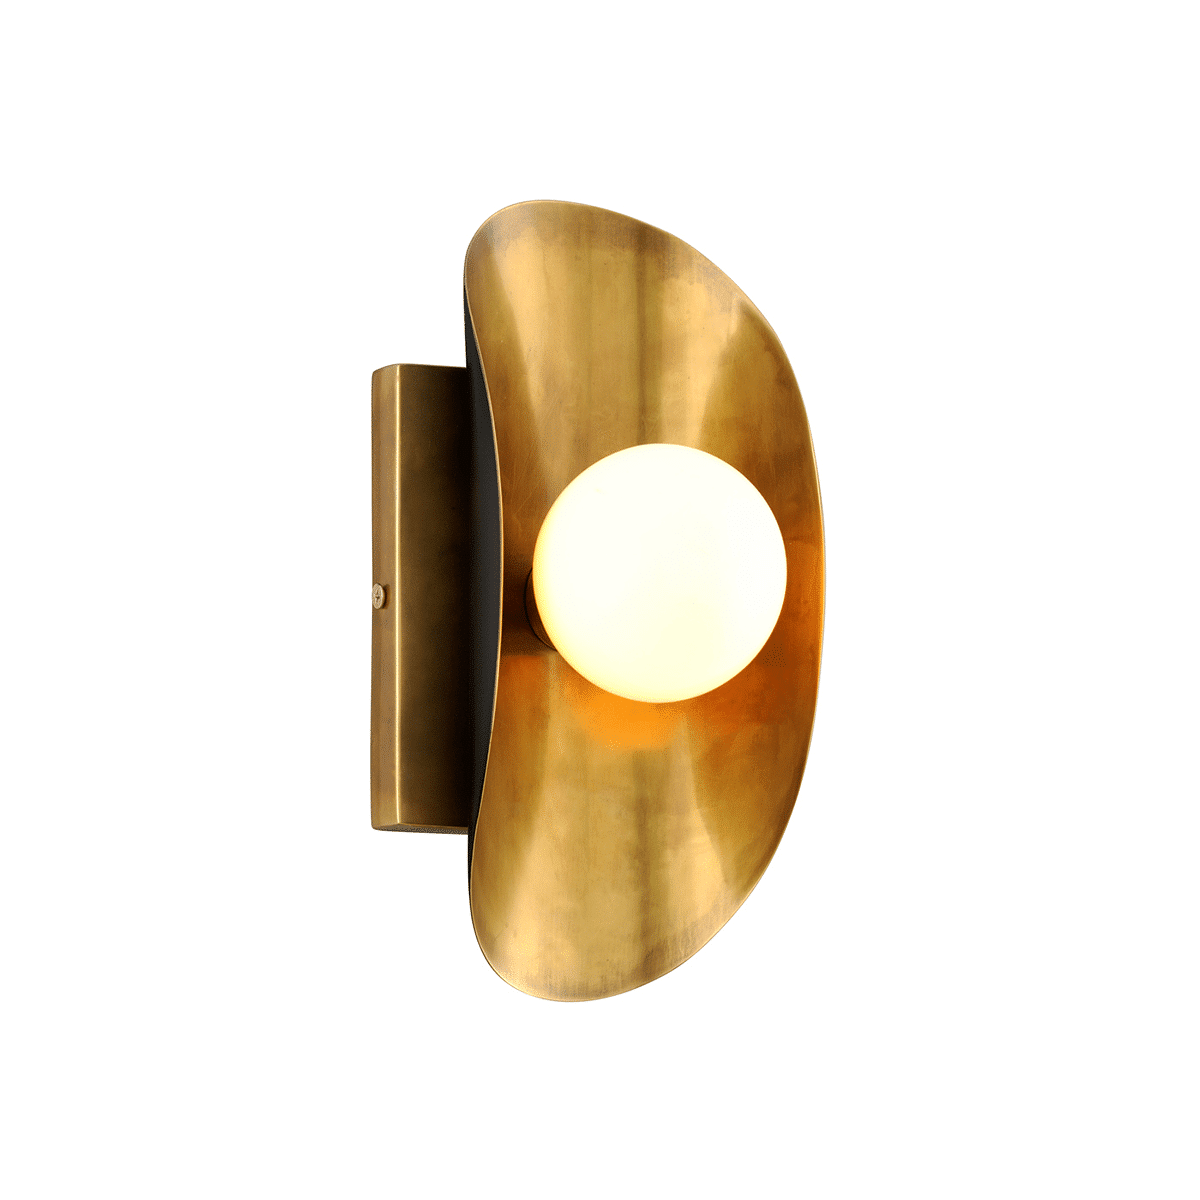 Vägglampa Hopper Hopper 1lt Vägglampa (Vintage brass bronze accents) (271-11-CE)